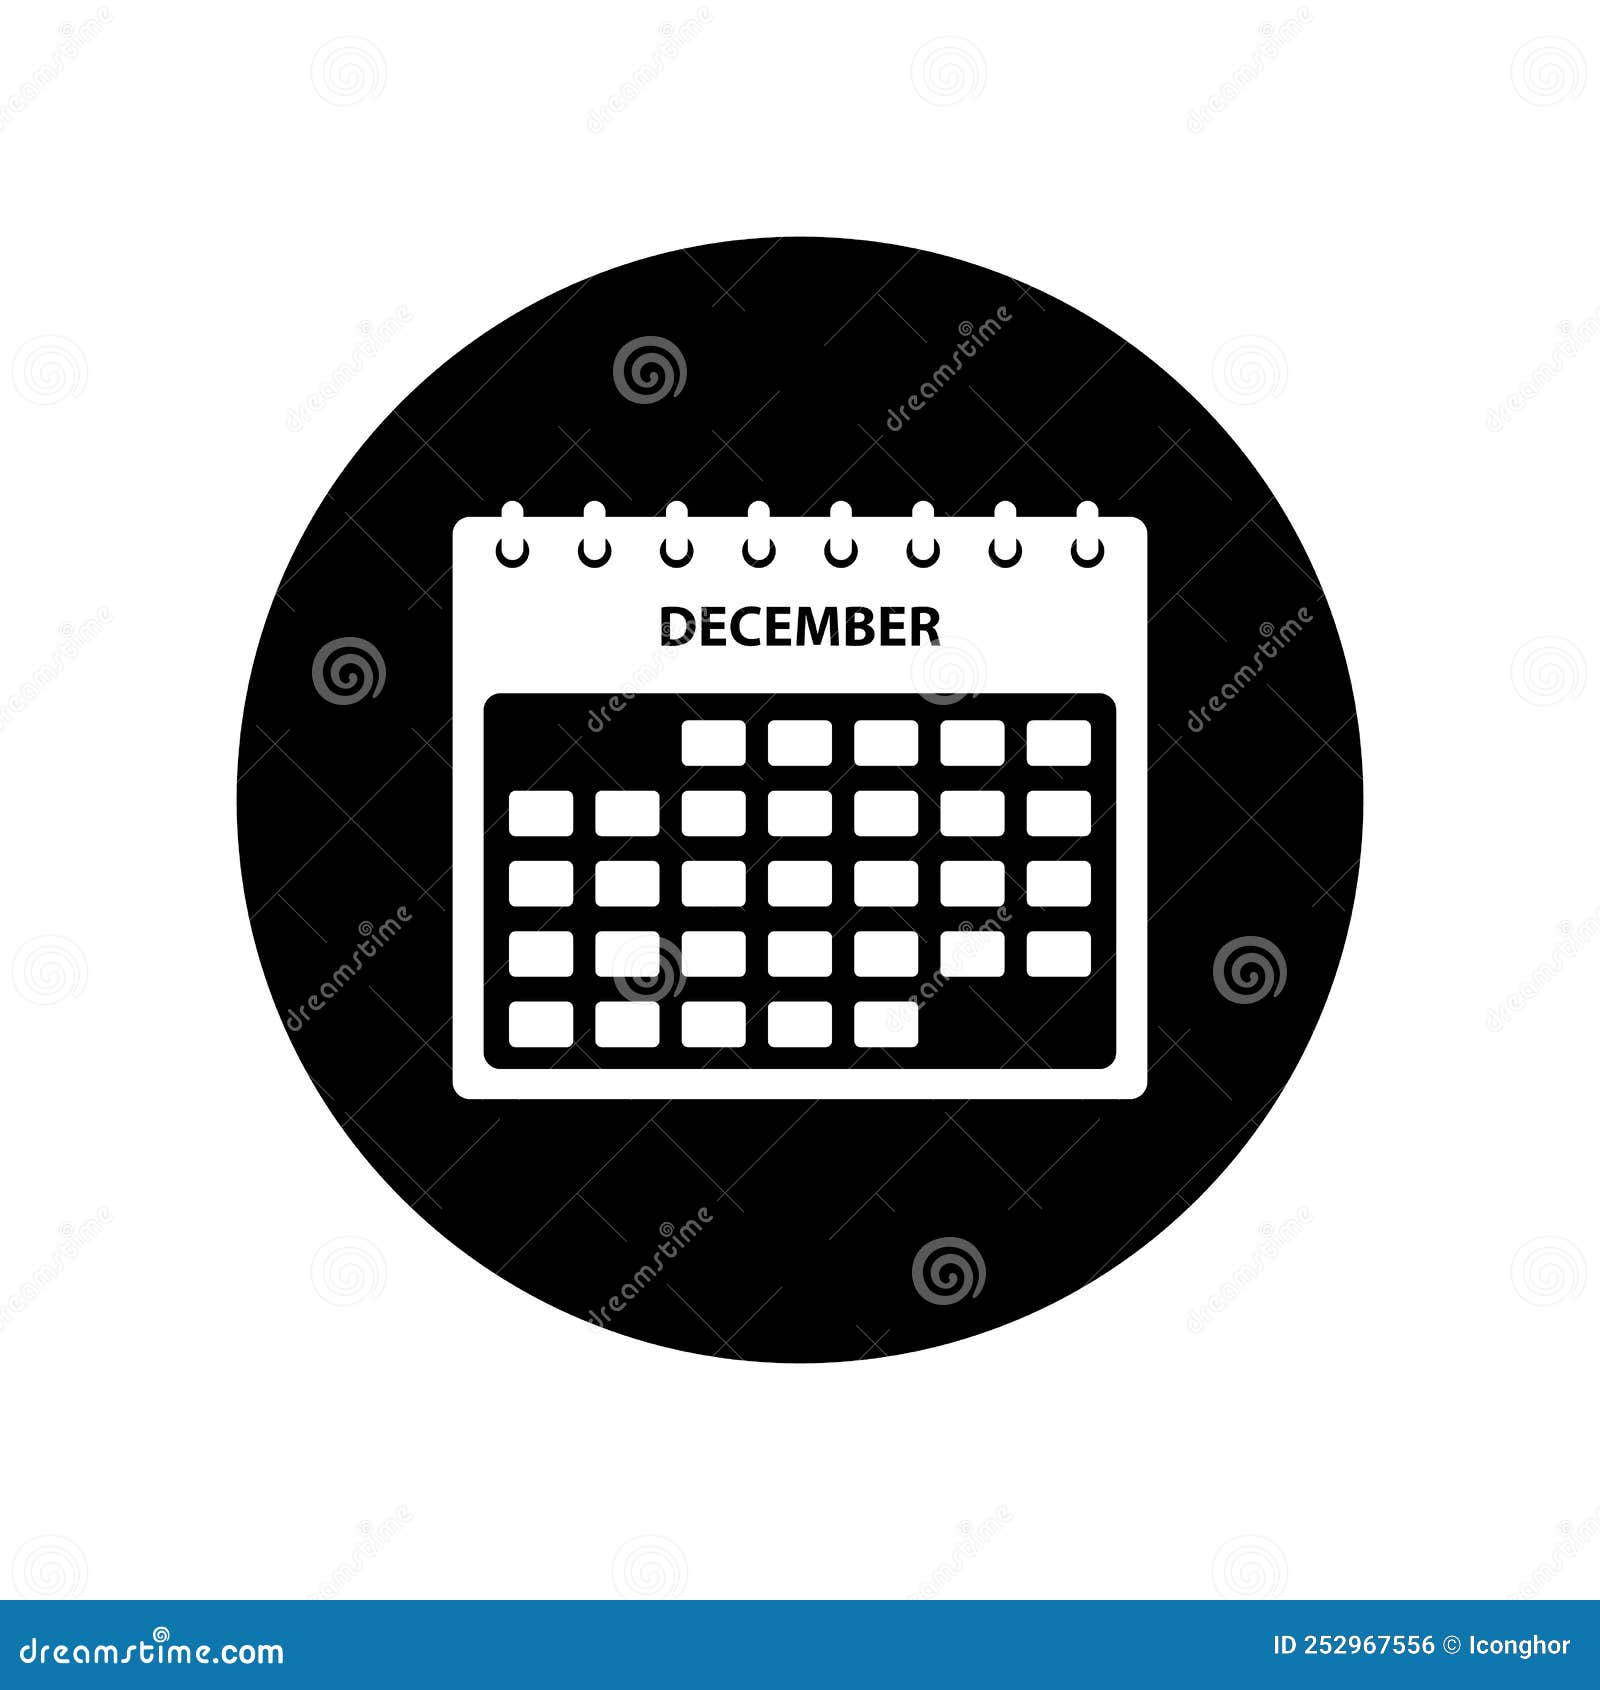 December Calendar Icon Stock Vector Illustration Of Icon 252967556